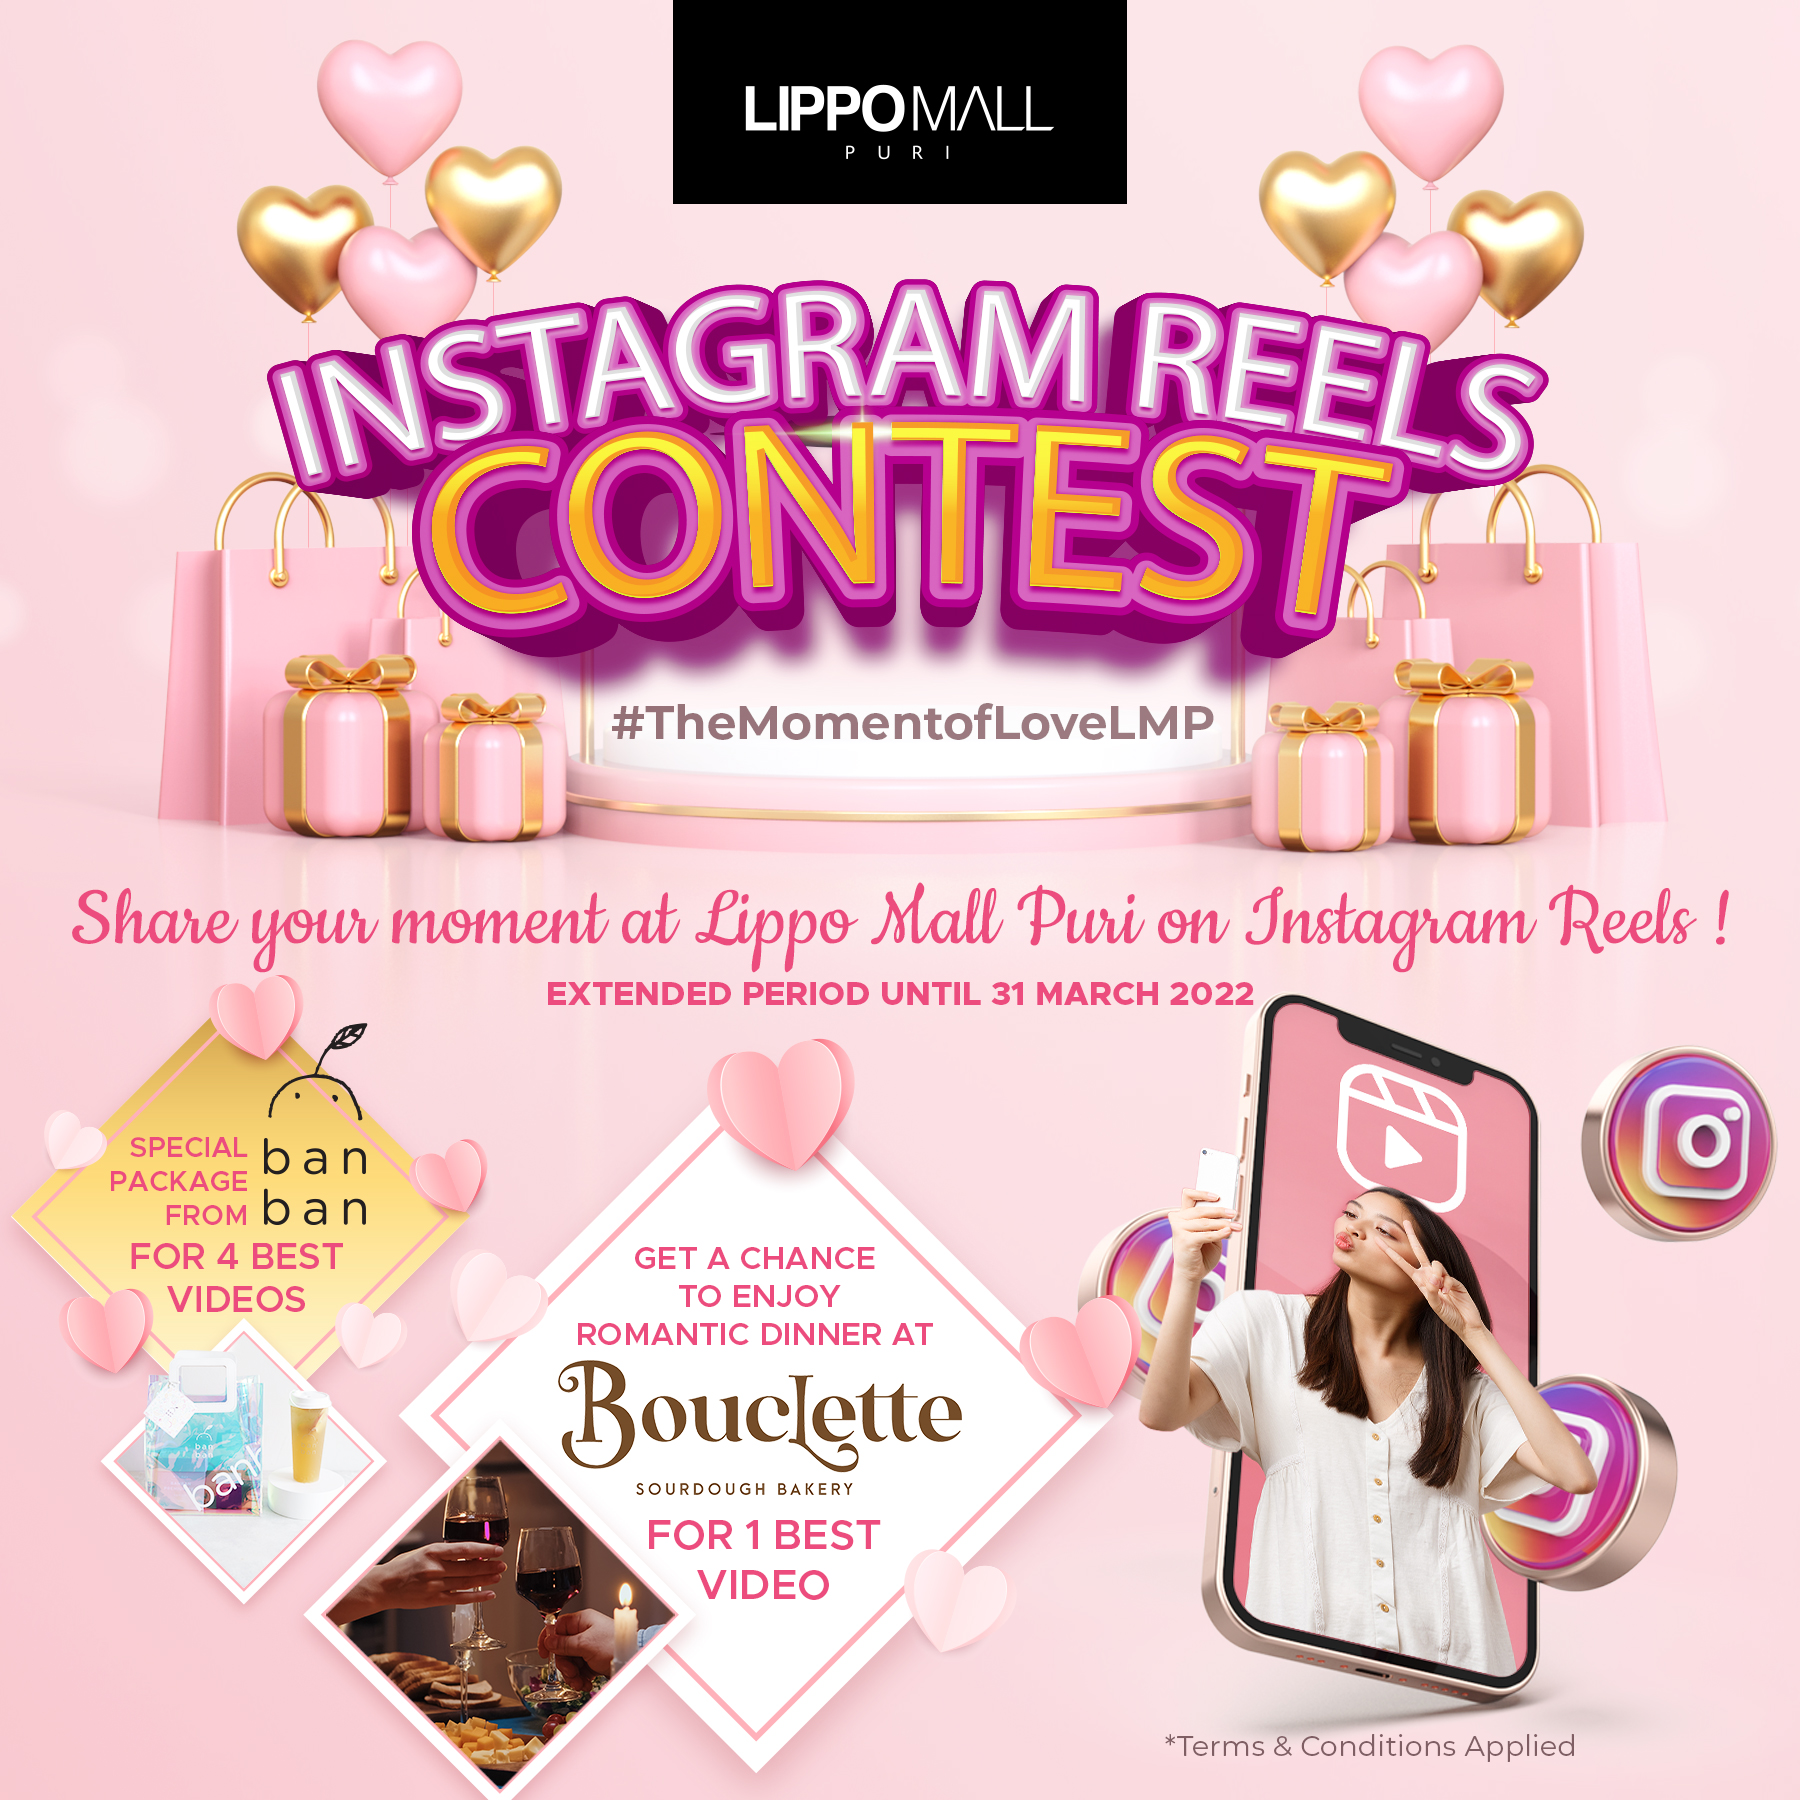 instagram reels contest promo in lippo mall puri st. moritz